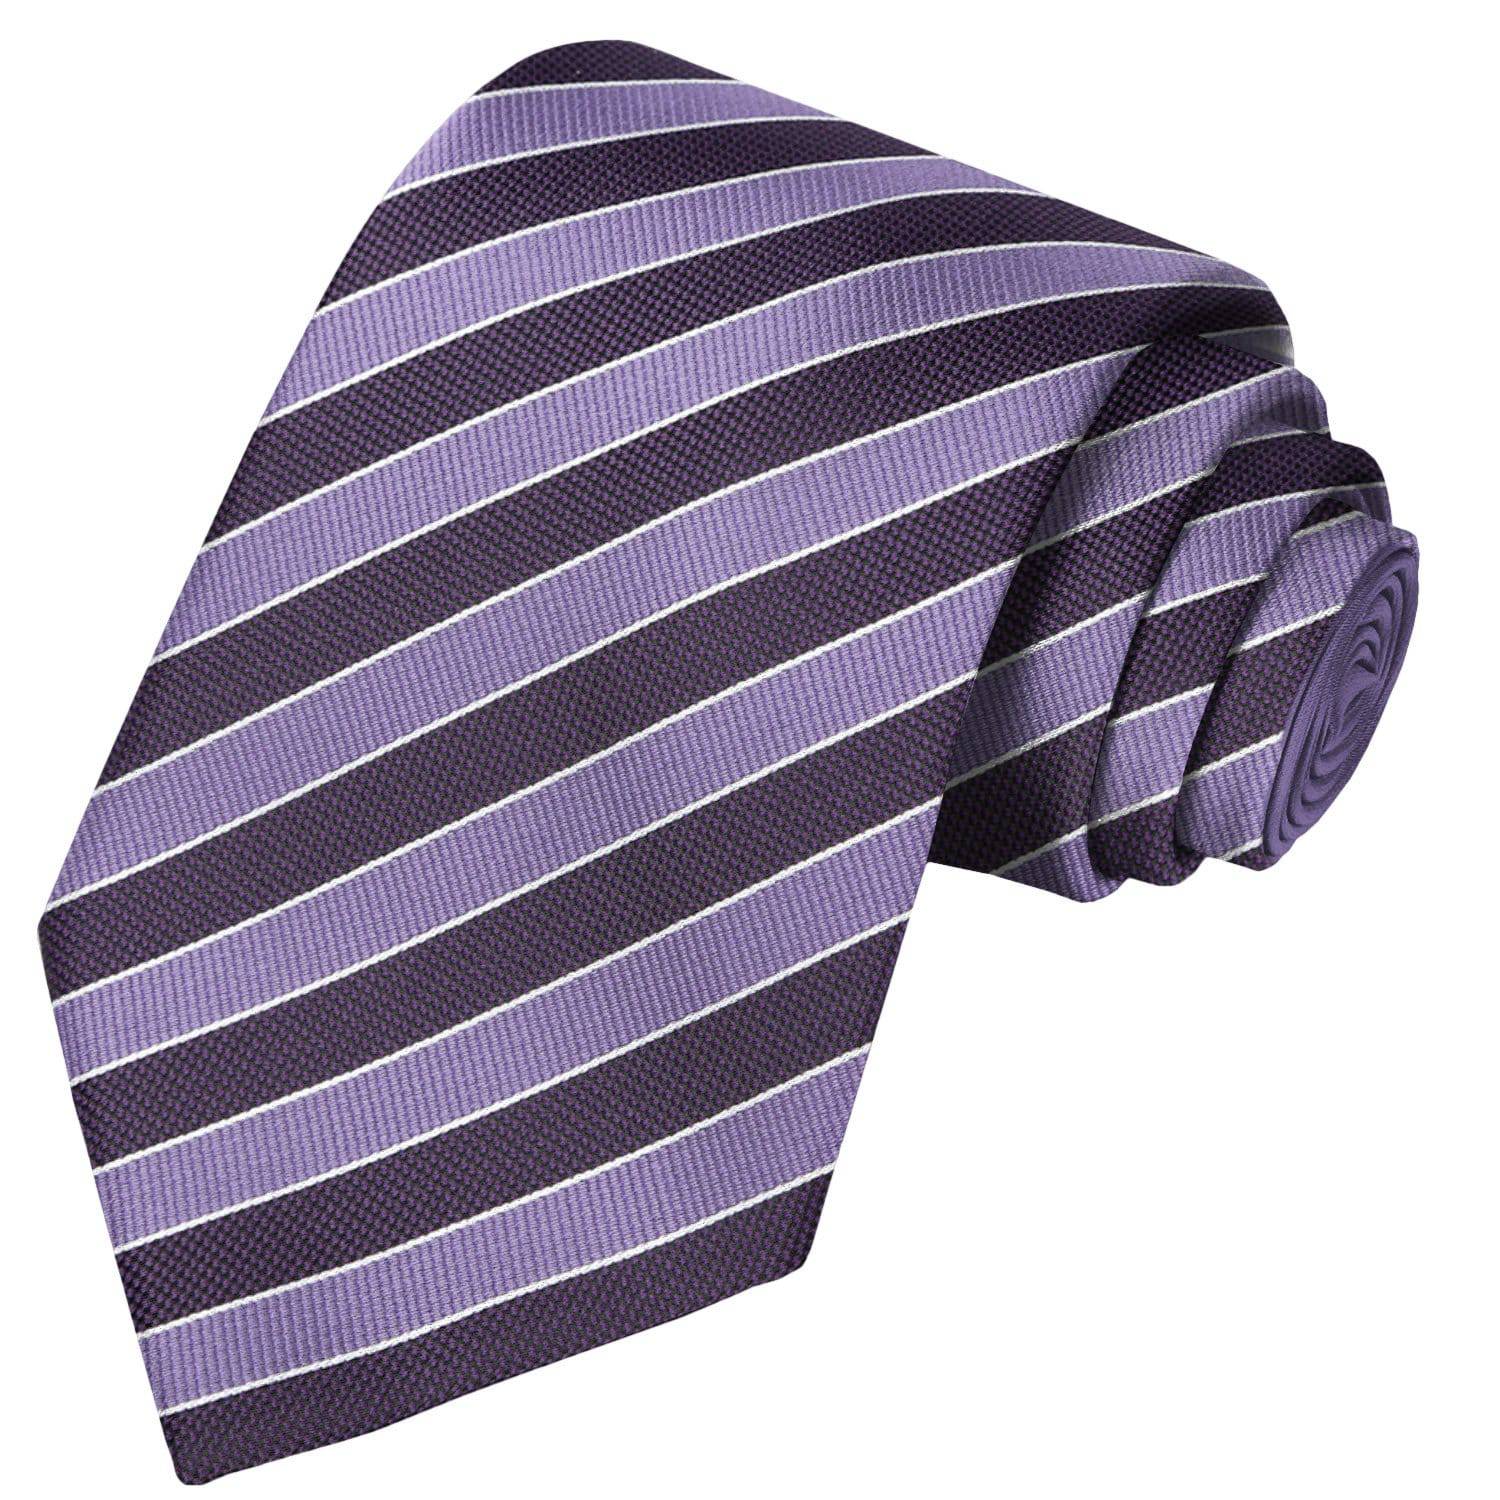 Eggplant-White-Heather Striped Tie - Tie, bowtie, pocket square  | Kissties